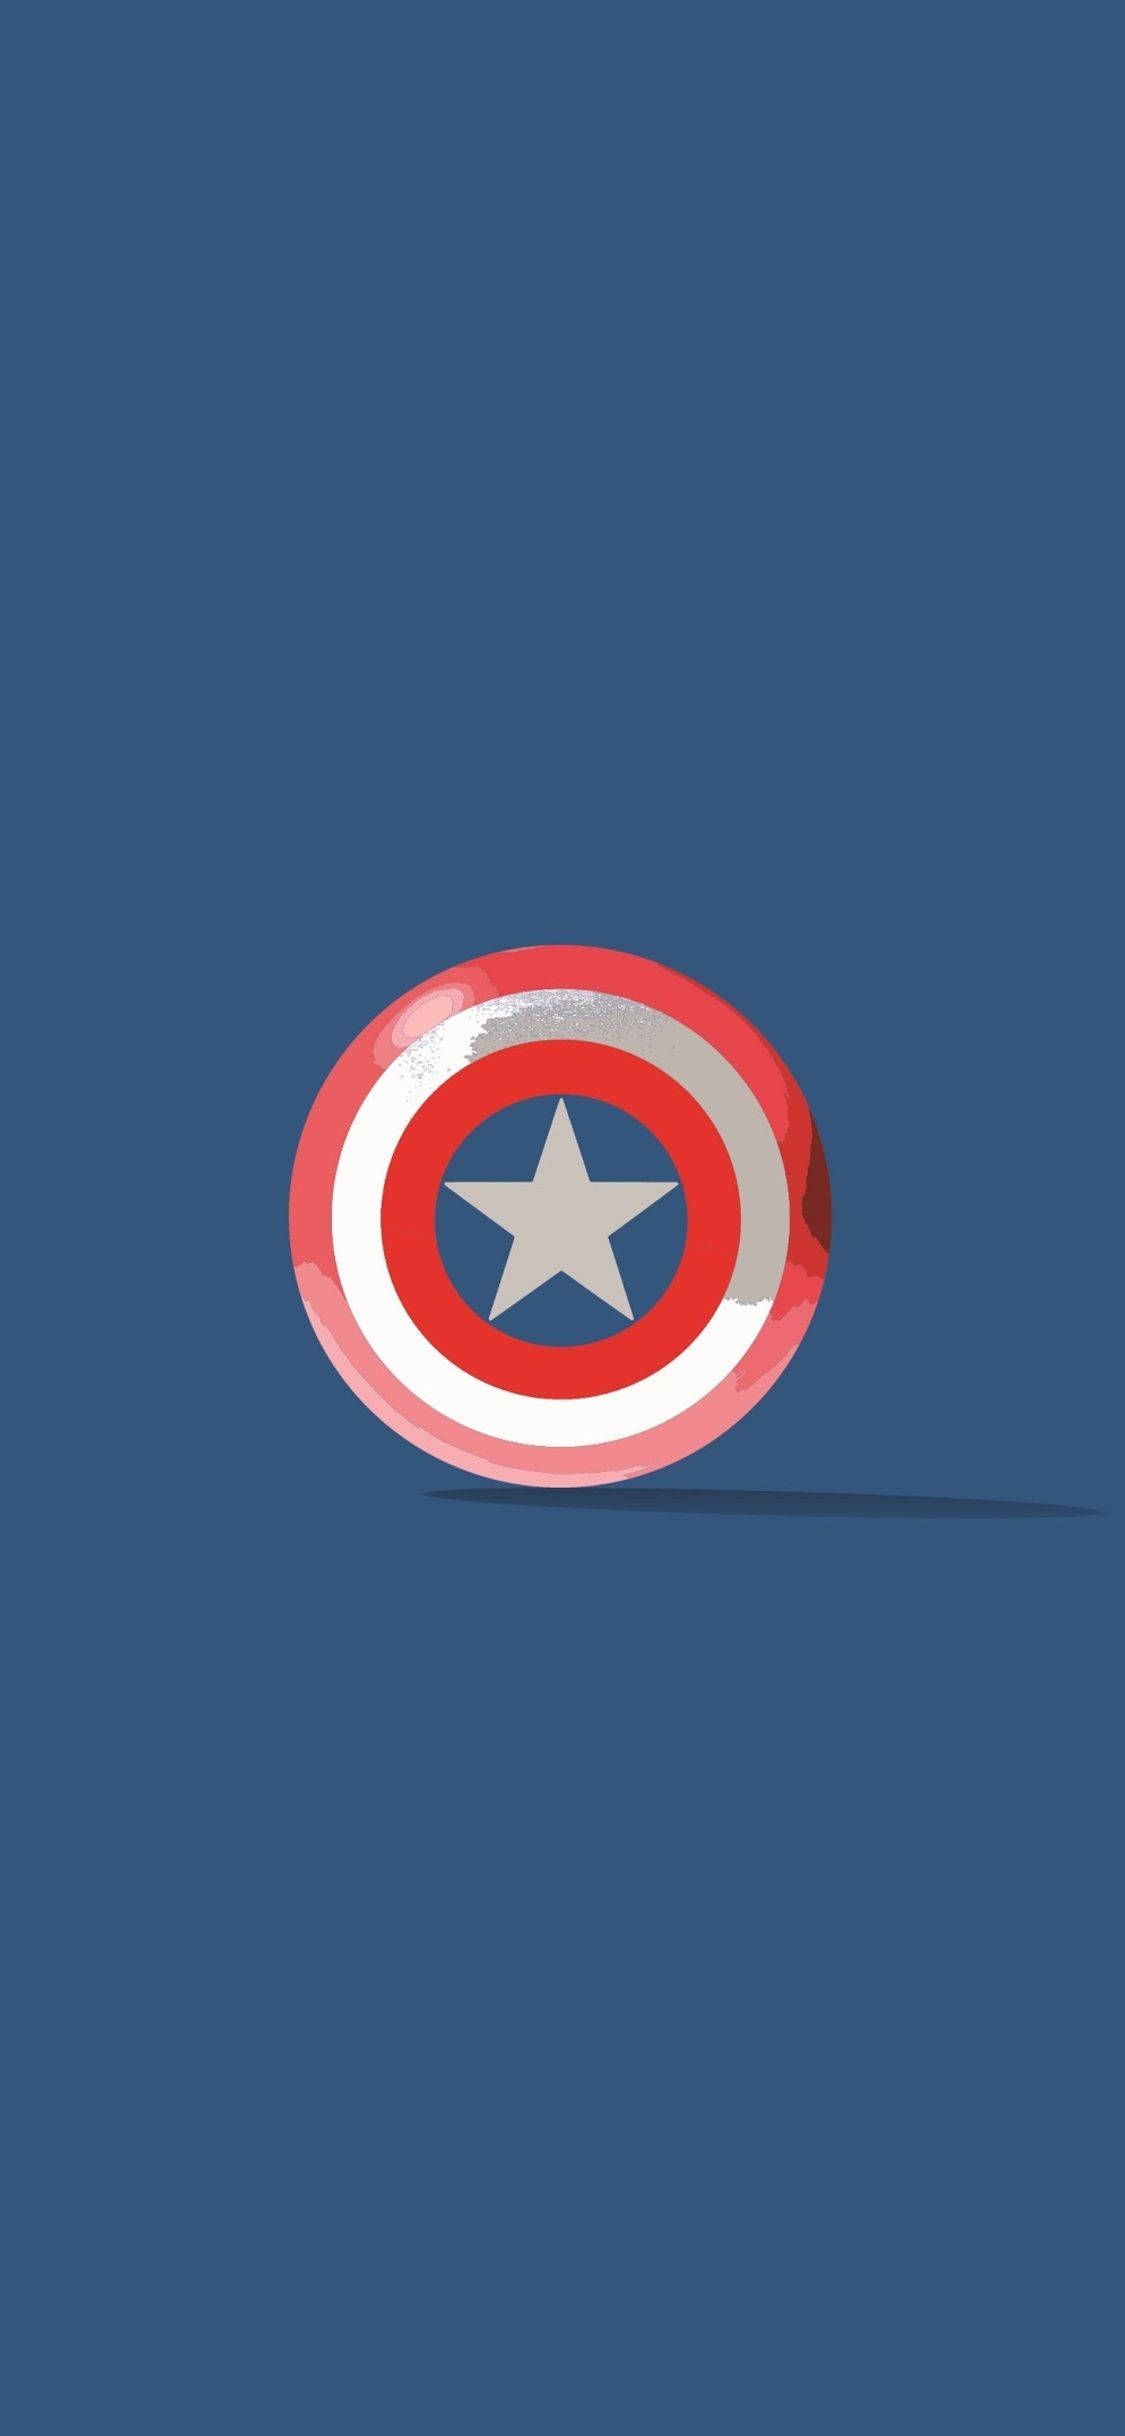  Captain Marvel Hintergrundbild 1125x2436. Free Captain America Shield iPhone Wallpaper Downloads, Captain America Shield iPhone Wallpaper for FREE